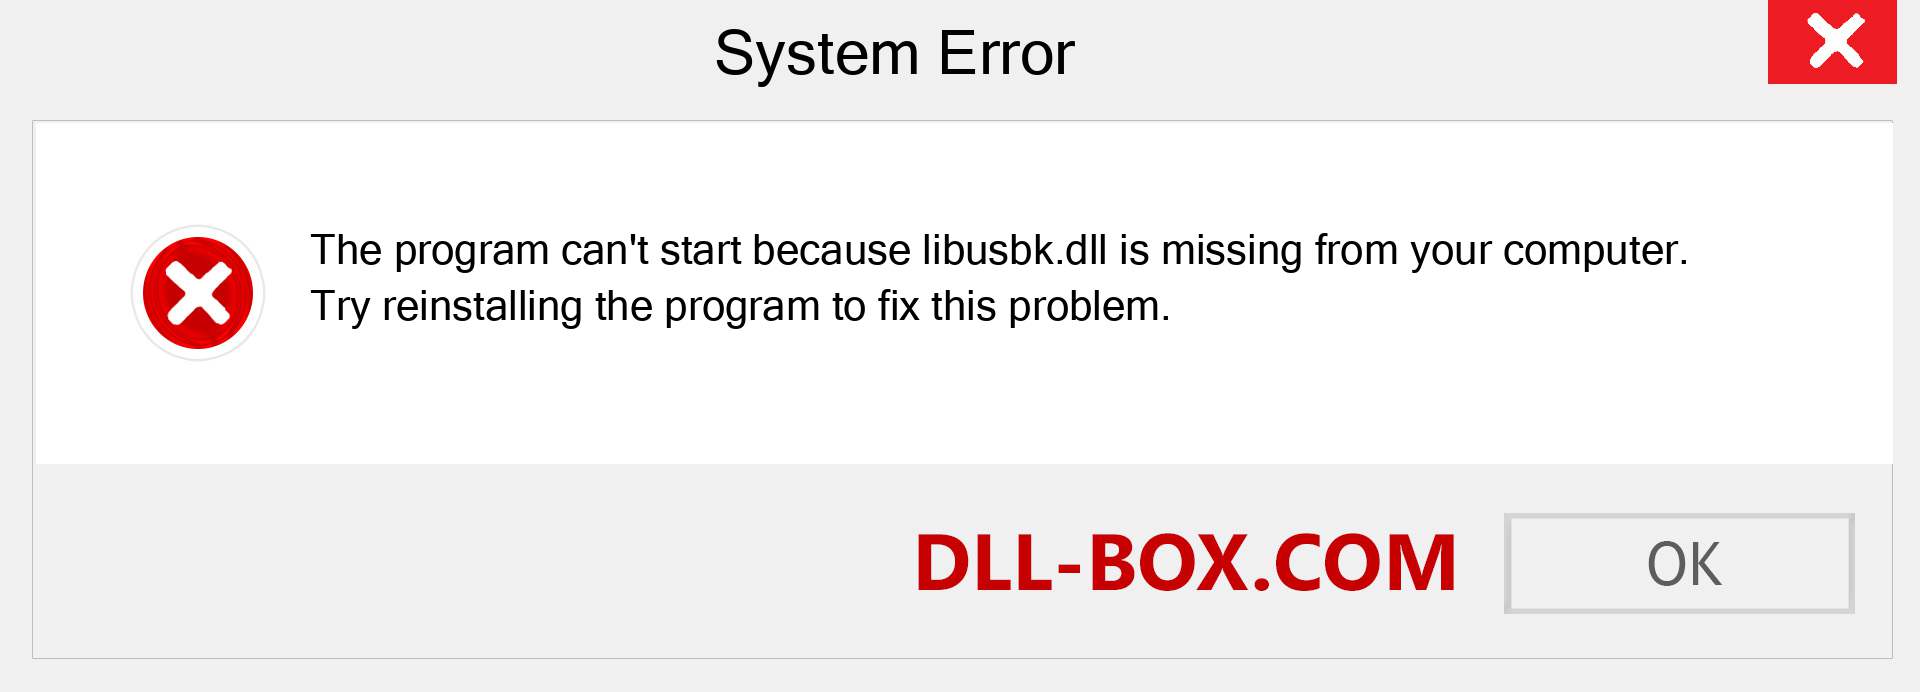  libusbk.dll file is missing?. Download for Windows 7, 8, 10 - Fix  libusbk dll Missing Error on Windows, photos, images